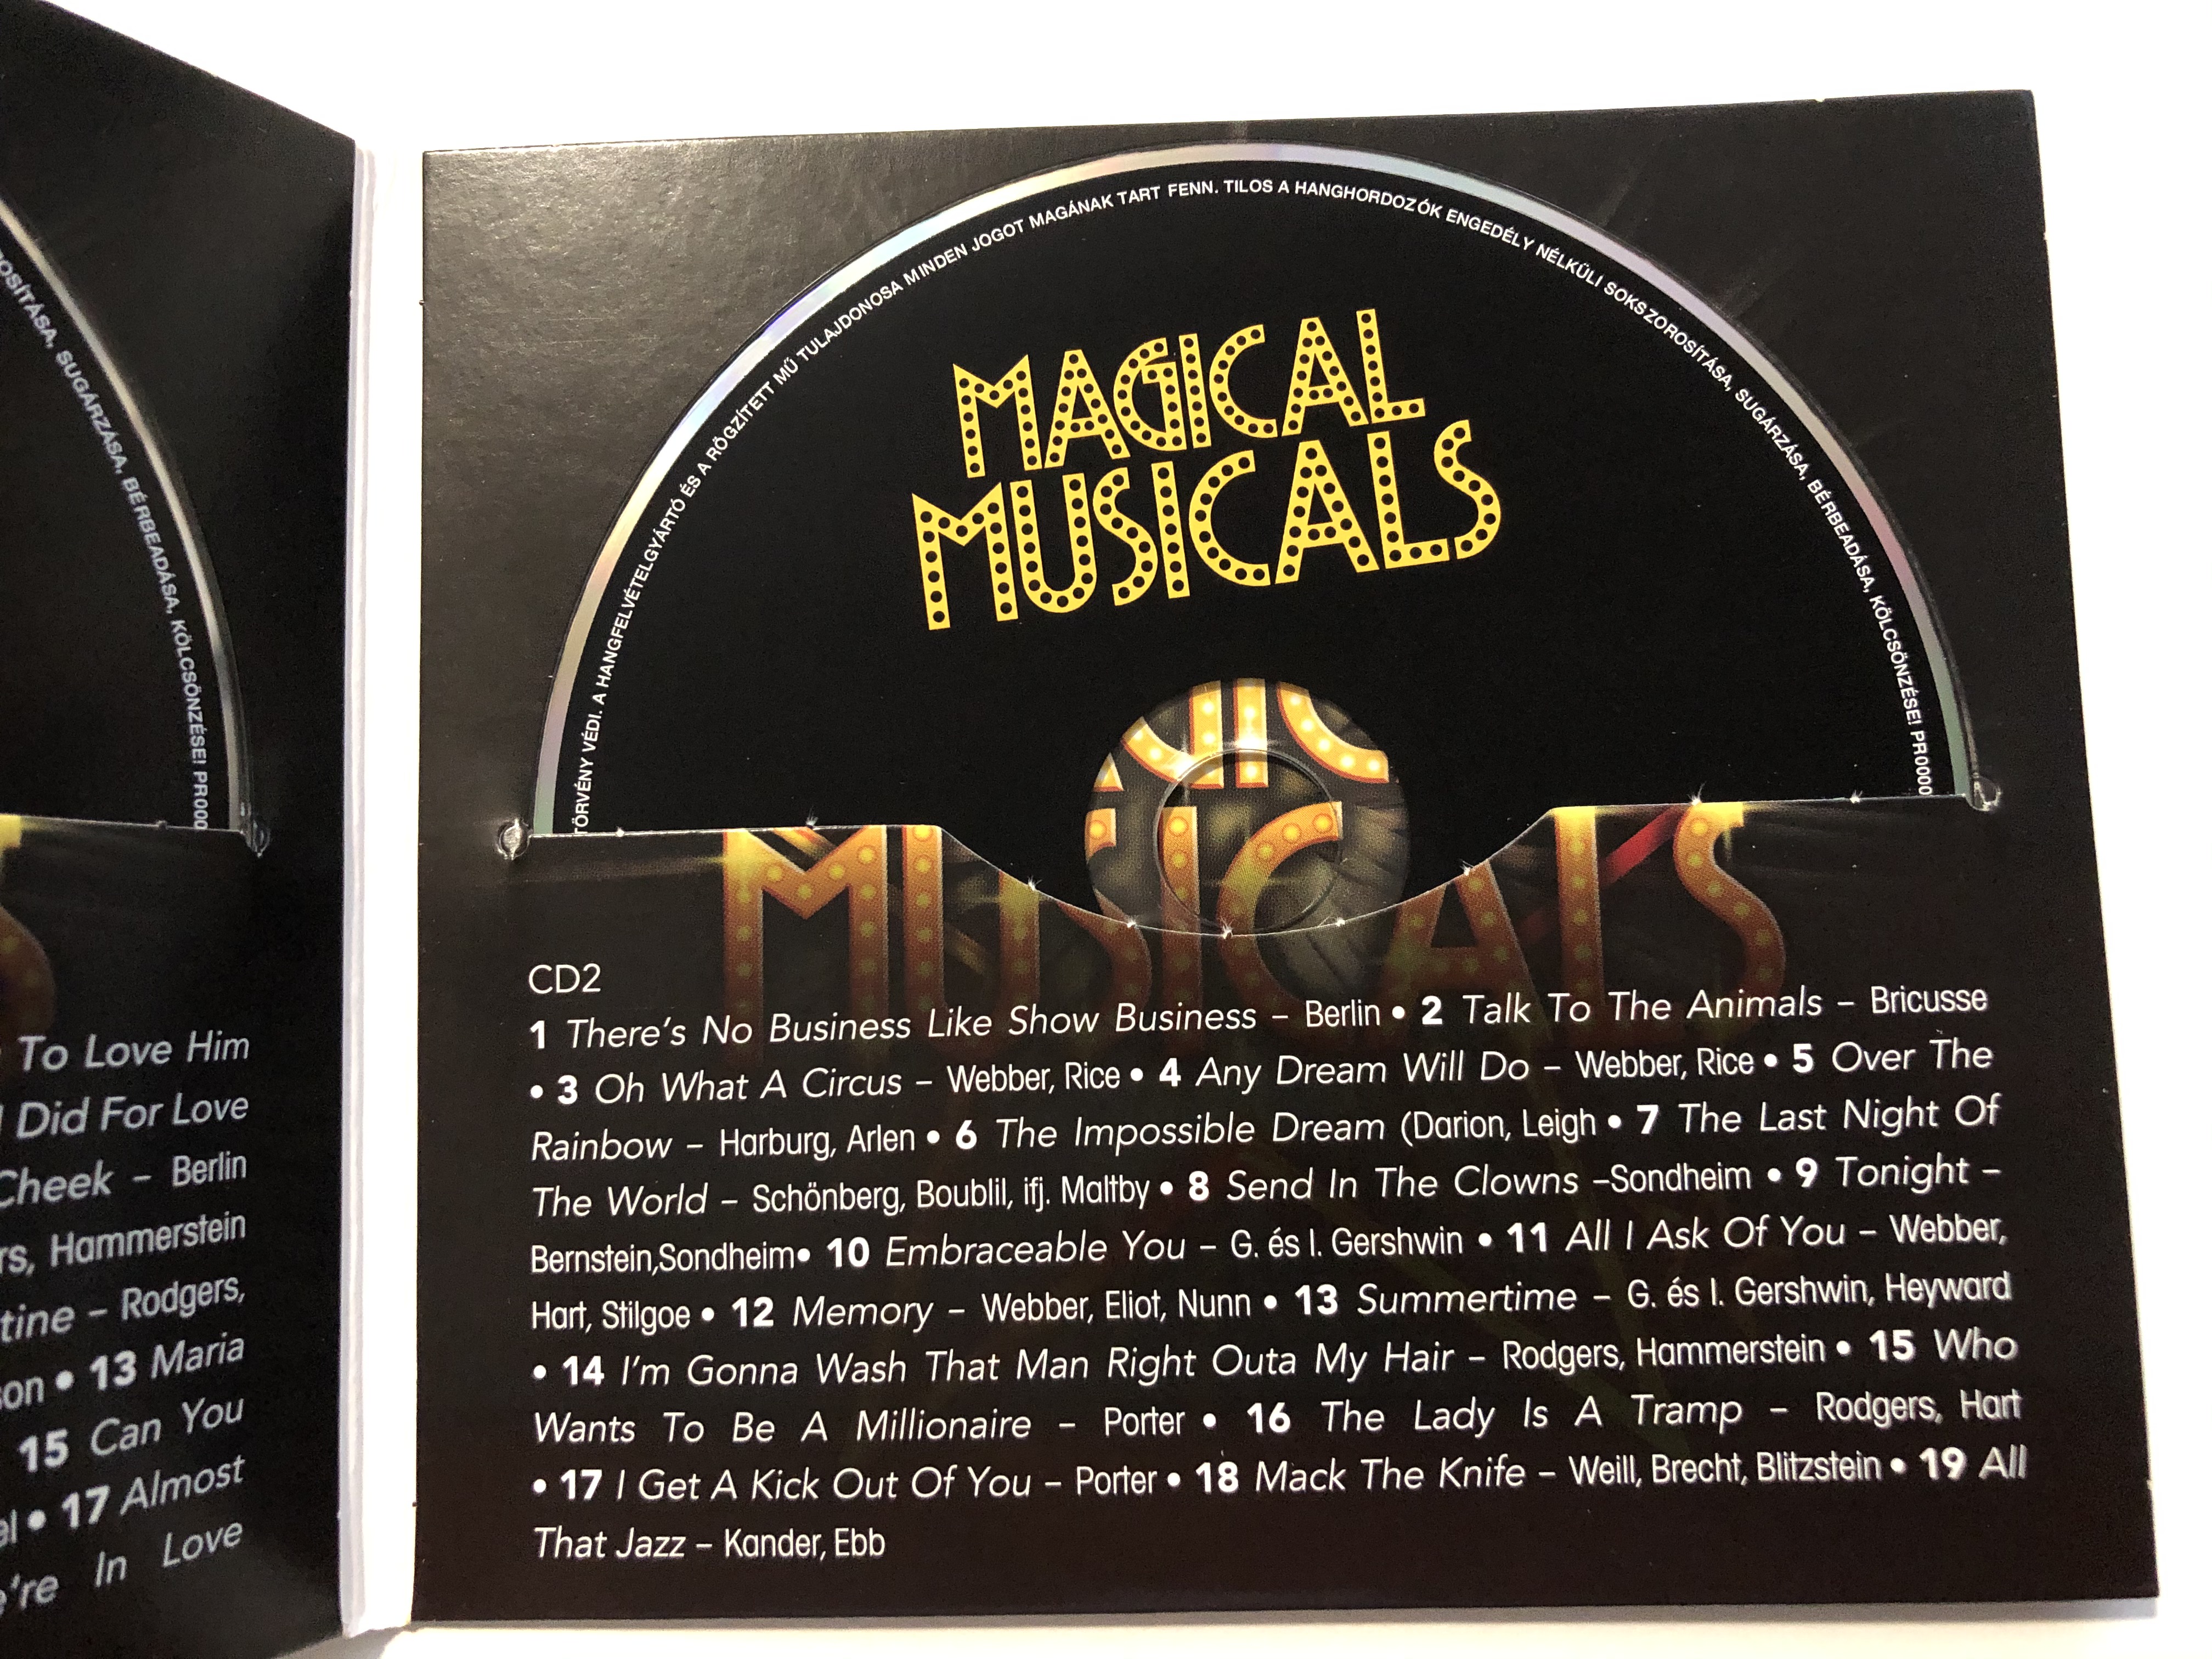 magical-musicals-reader-s-digest-2x-audio-cd-2013-pr00007448.00-3-.jpg